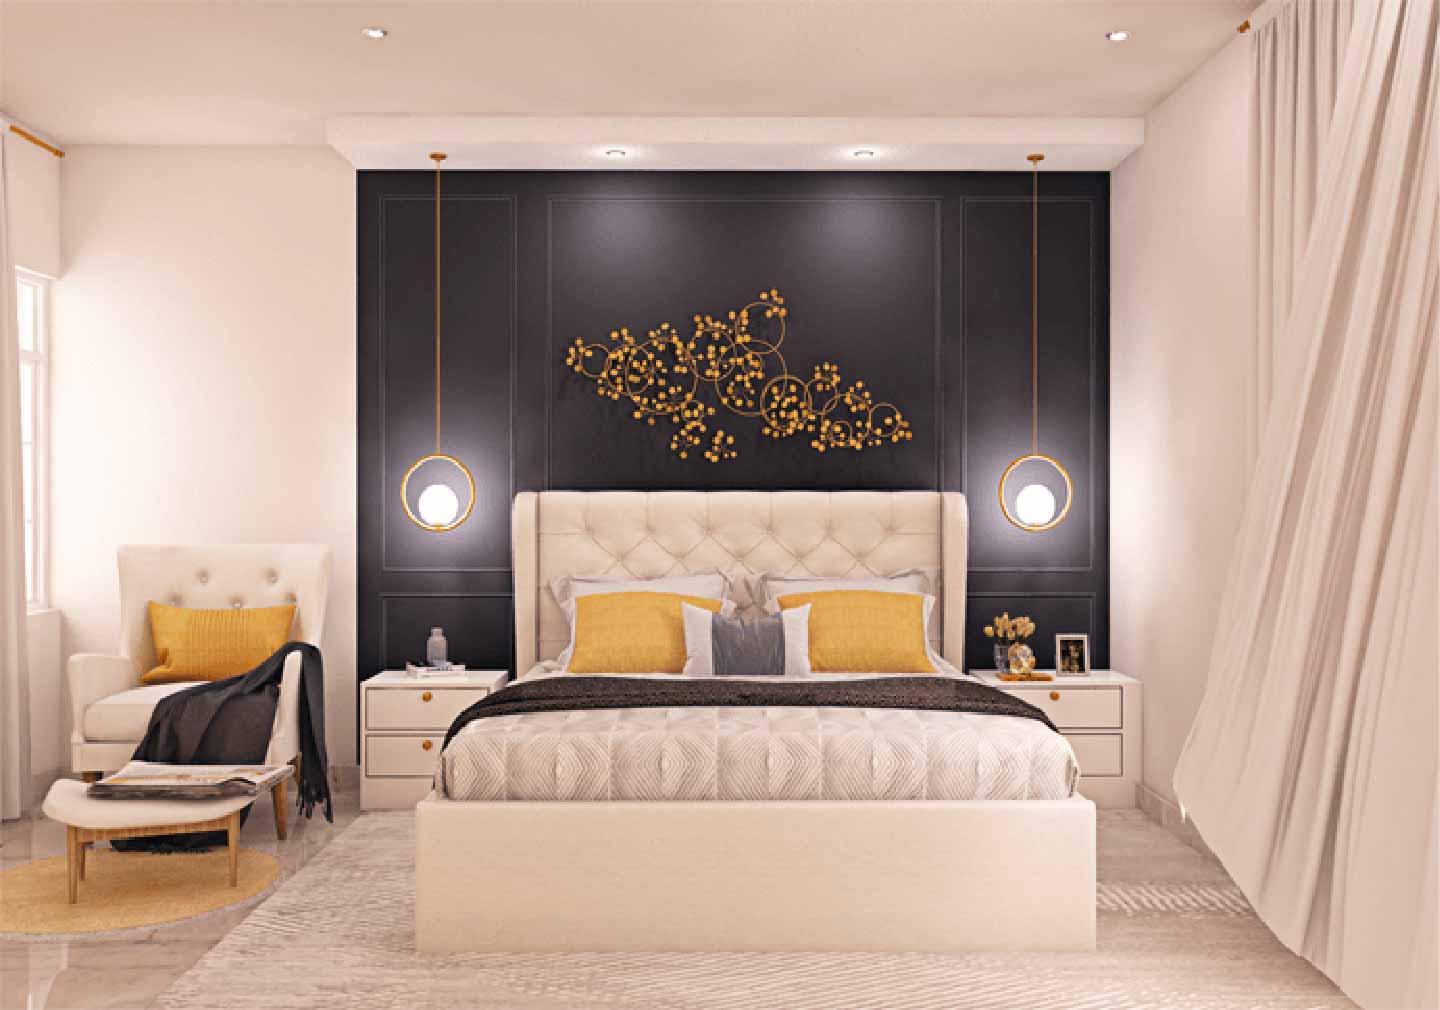 Statement Lights - Bedroom Interior design